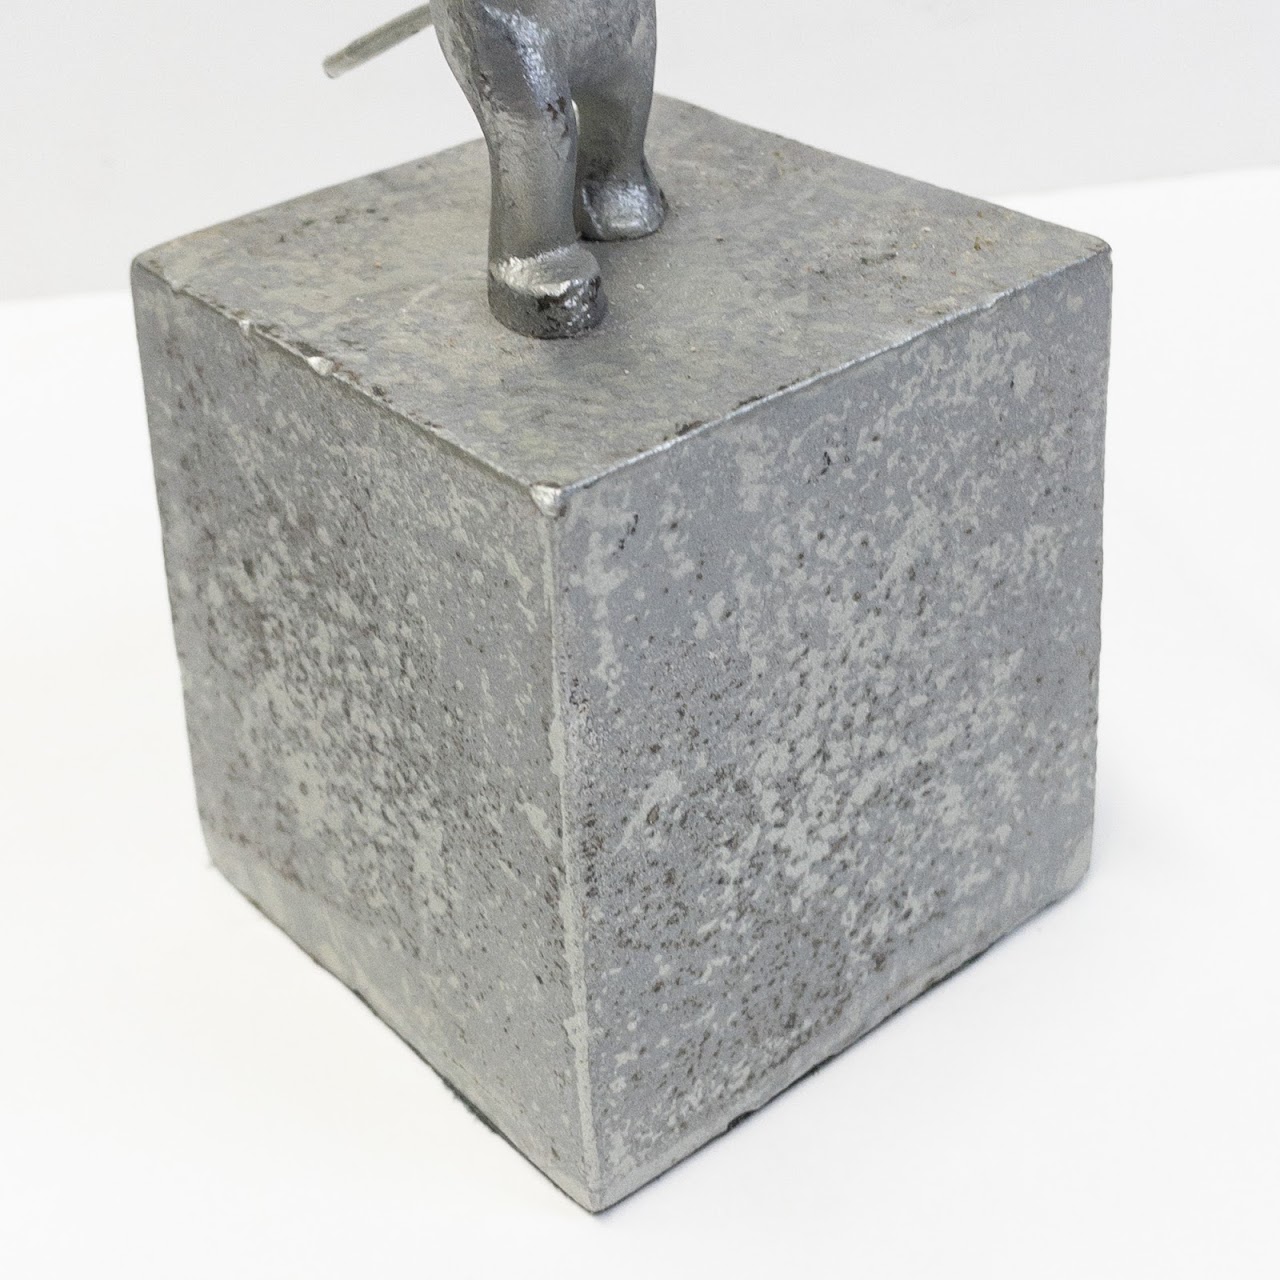 Modernist Mouse Sculpture